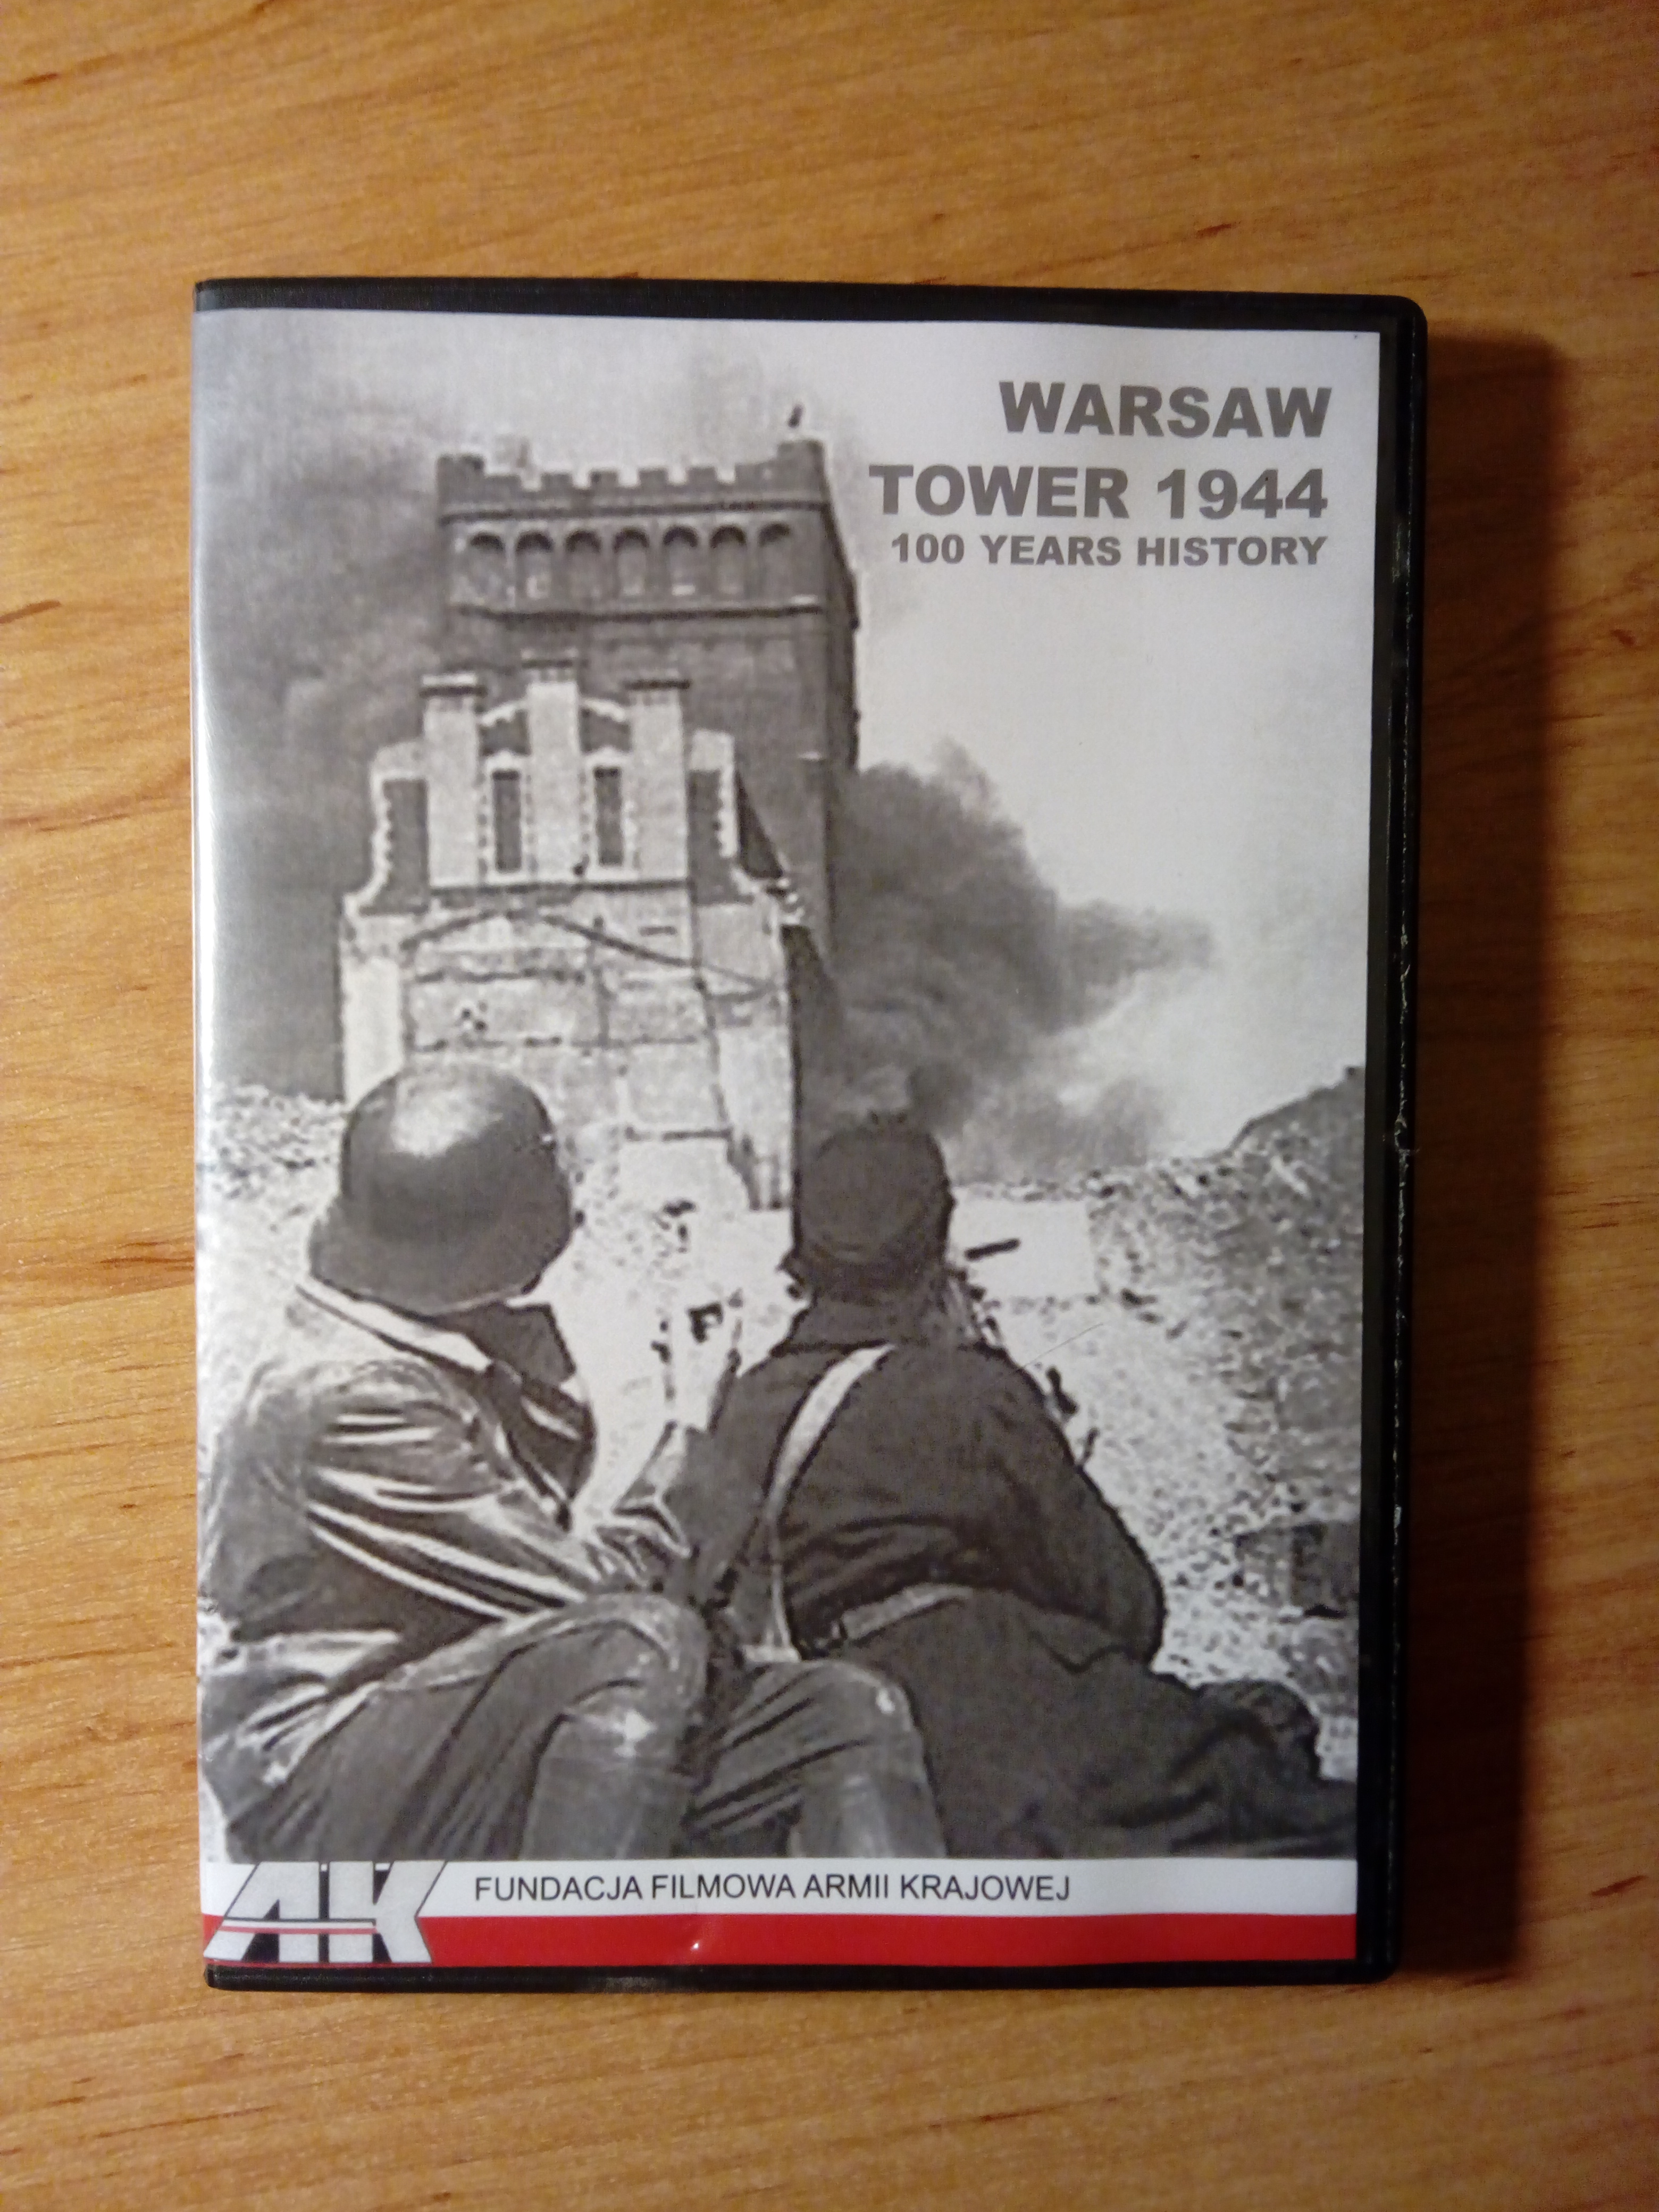 Warsaw Tower 1944 DVD 100 Years History (M.Widarski)